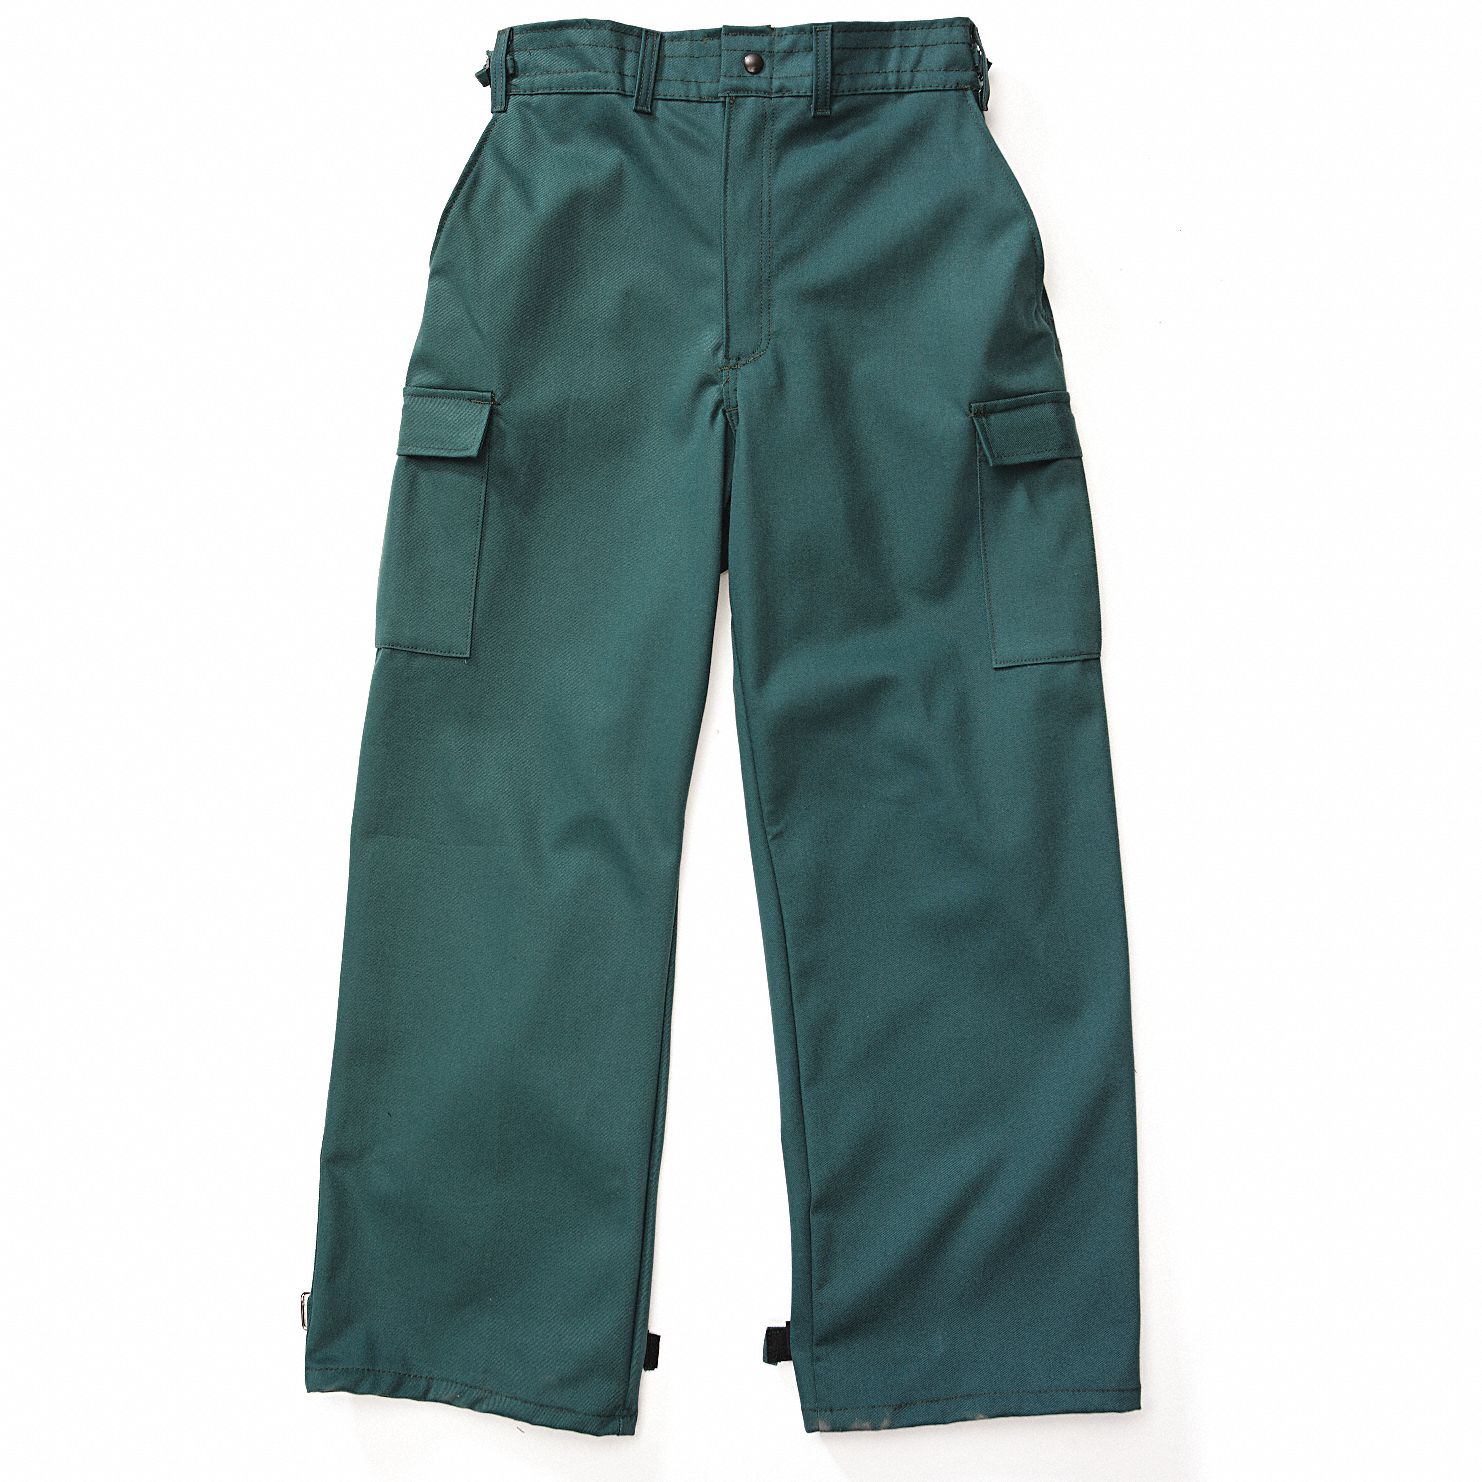 Wildland Fire Pants: 2XL, 43 to 47 in Fits Waist Size, 30 in Inseam, Green